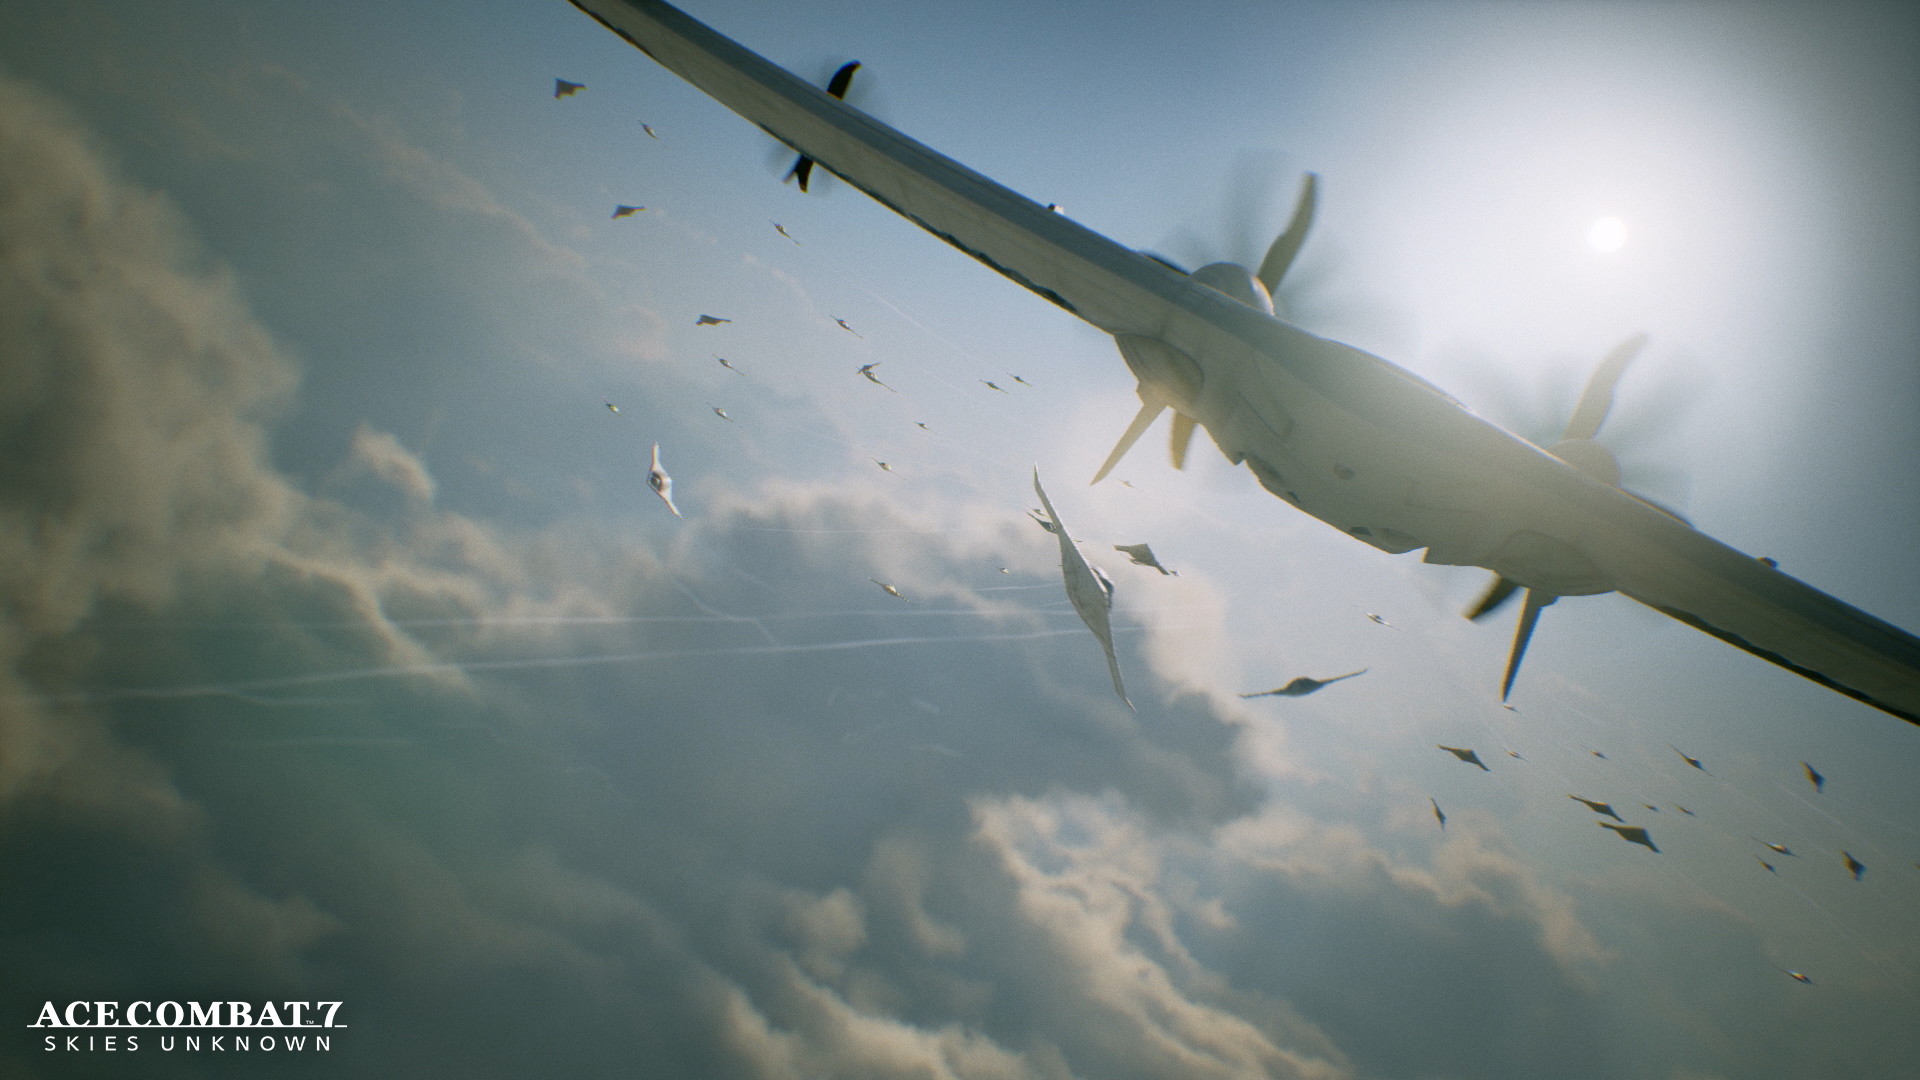 Ace Combat 7: Skies Unknown - screenshot 27